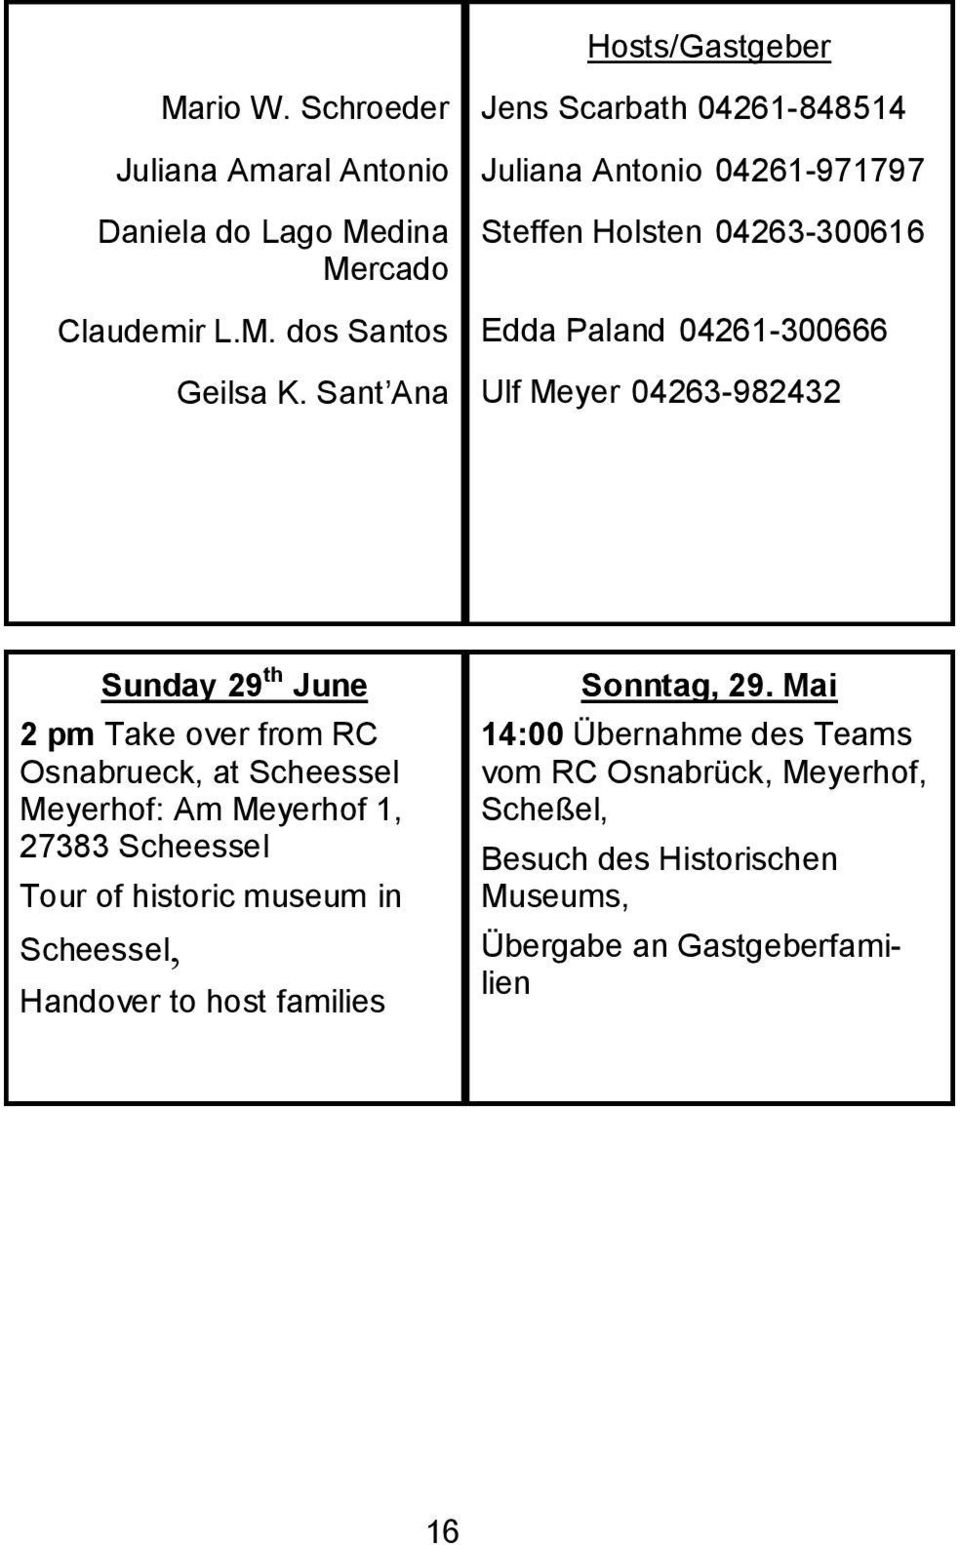 Sunday 29 th June 2 pm Take over from RC Osnabrueck, at Scheessel Meyerhof: Am Meyerhof 1, 27383 Scheessel Tour of historic museum in Scheessel,